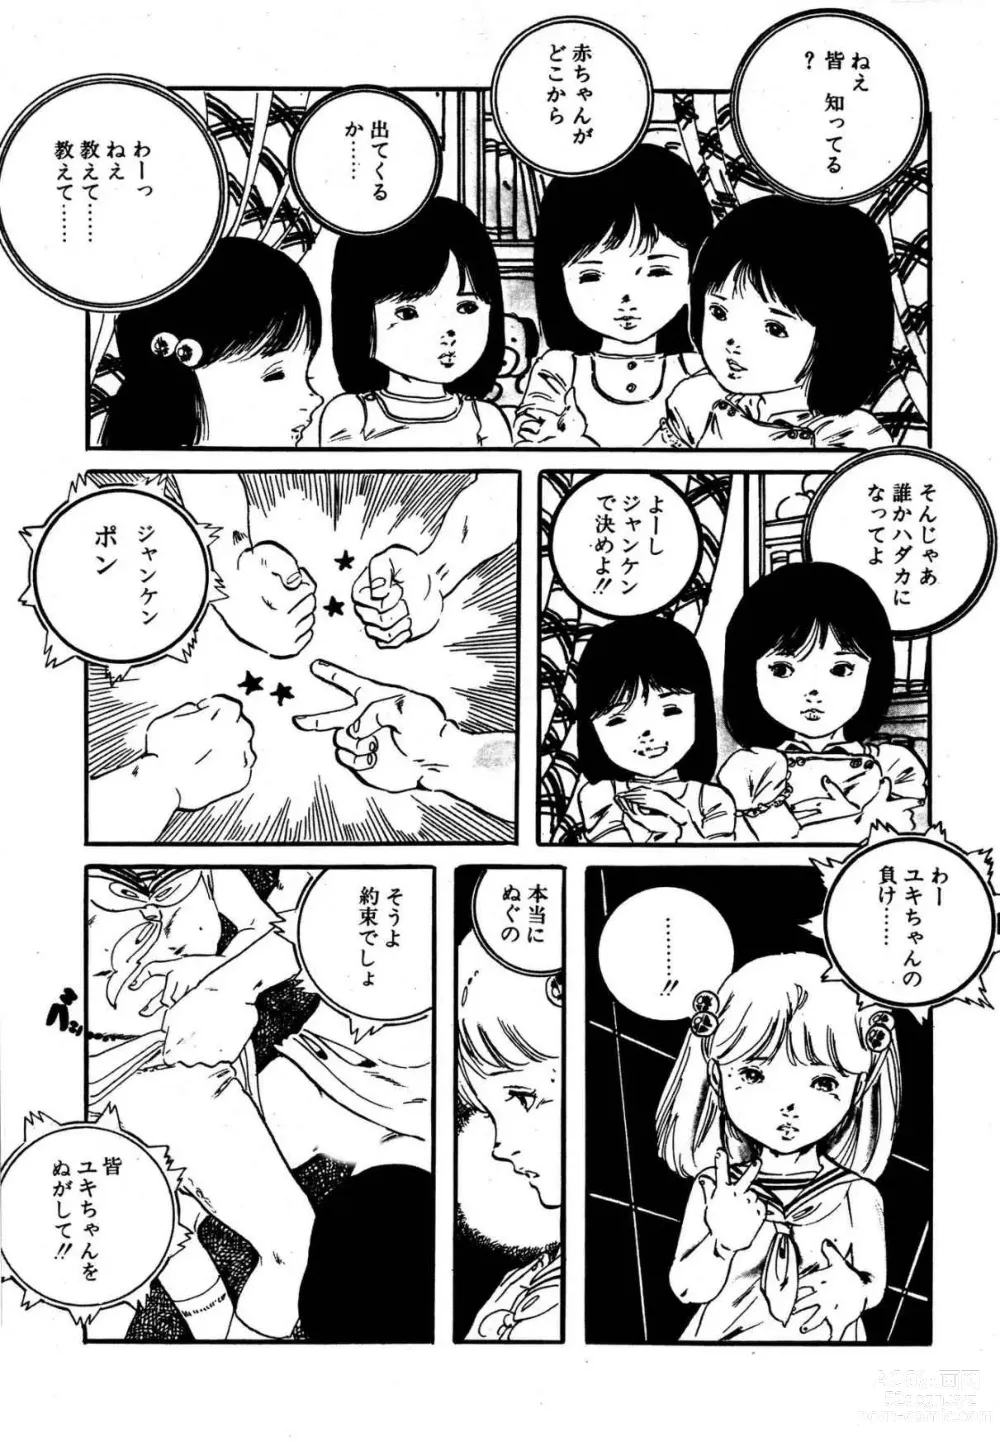 Page 187 of manga Dreaming fairy